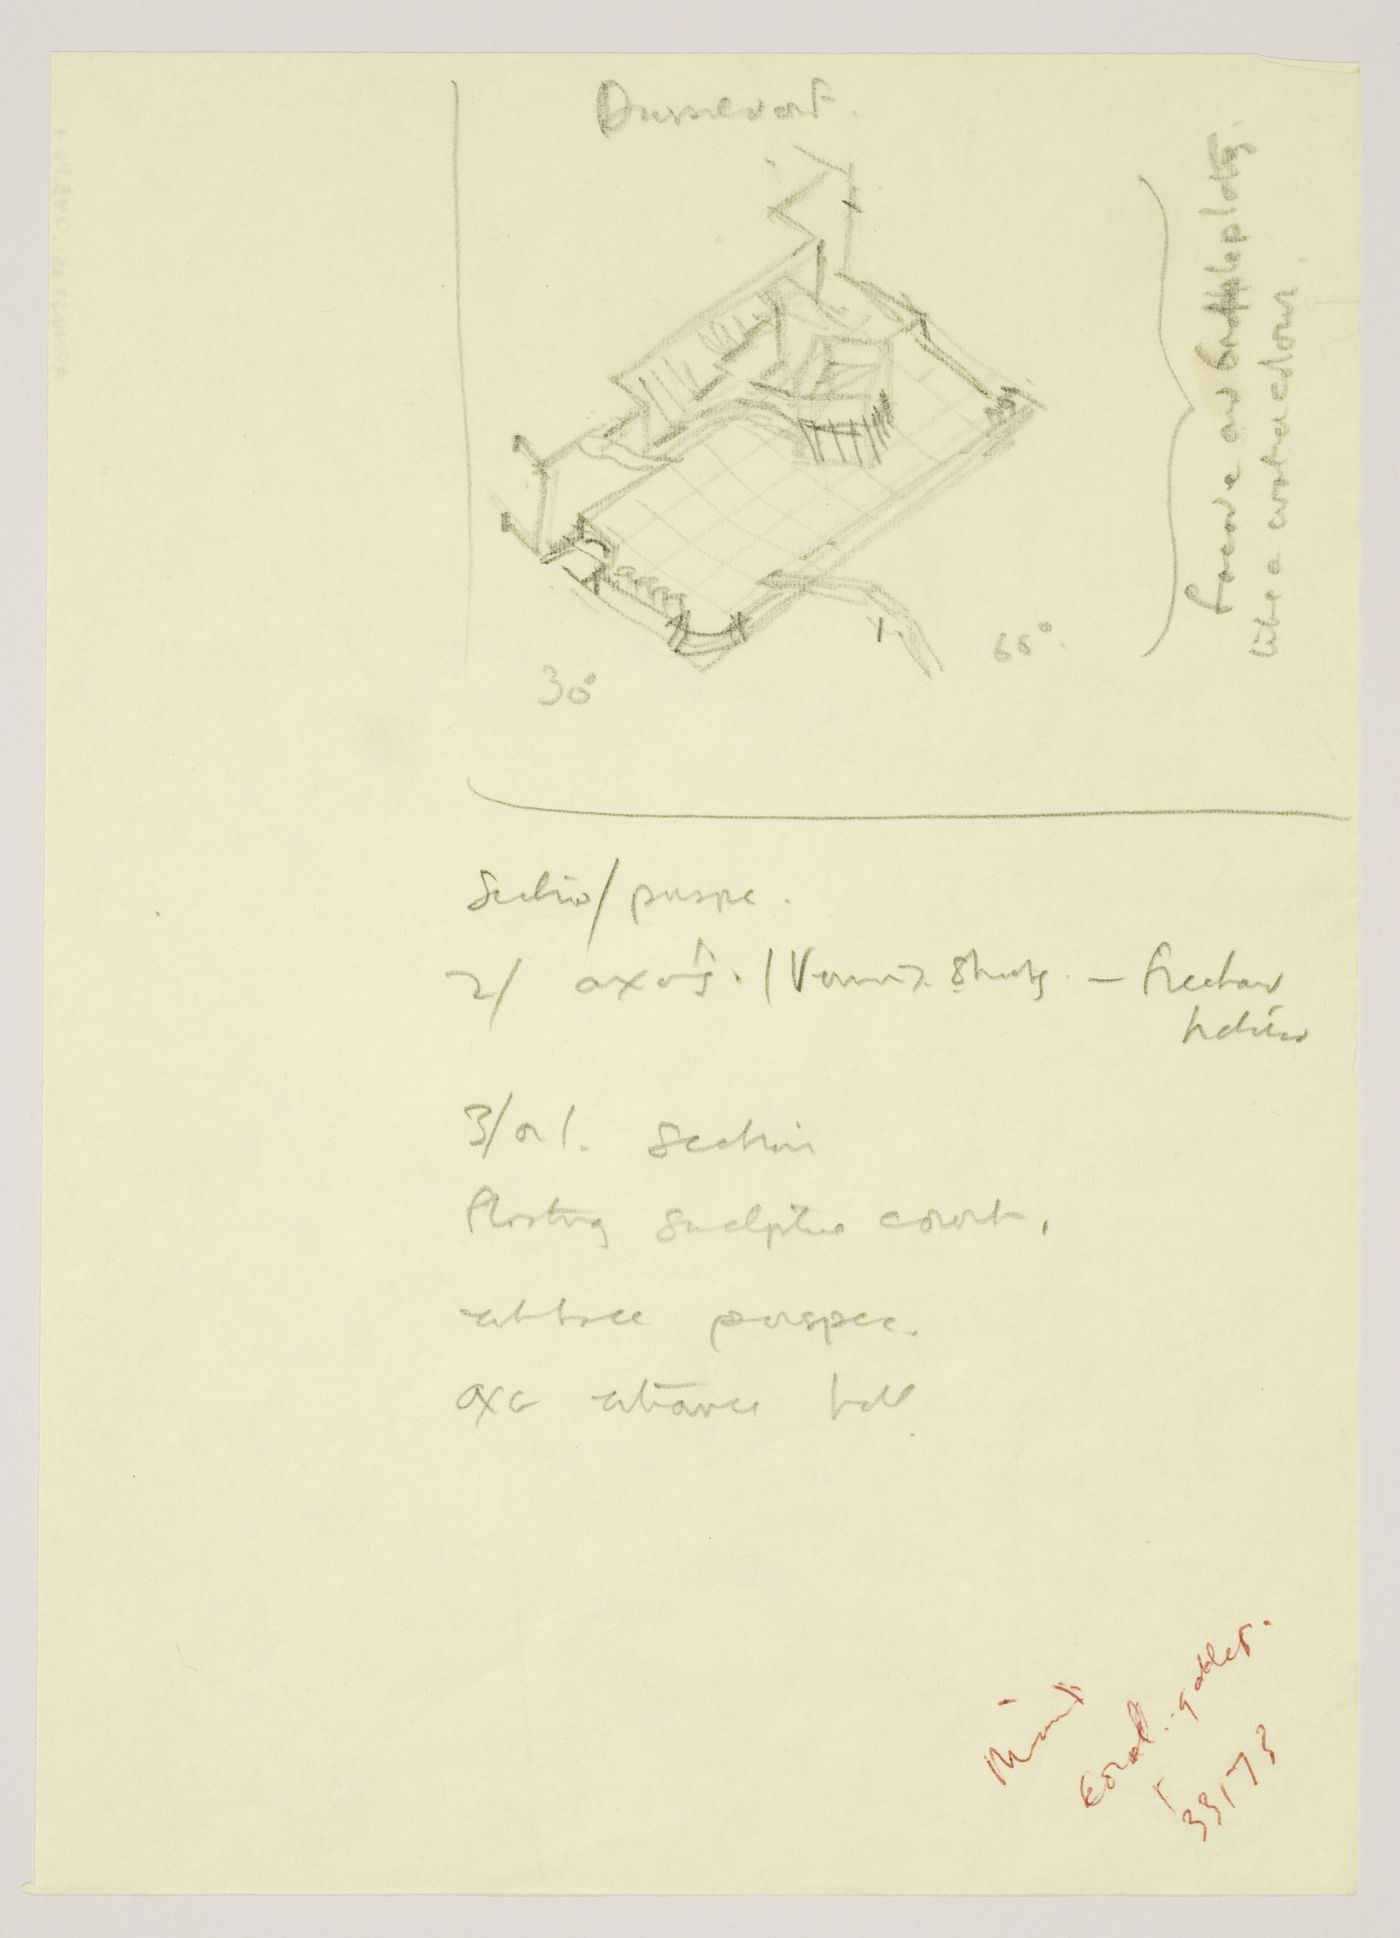 Nordrhein-Westfalen Museum, Dusseldorf, Germany: axonometric conceptual sketch